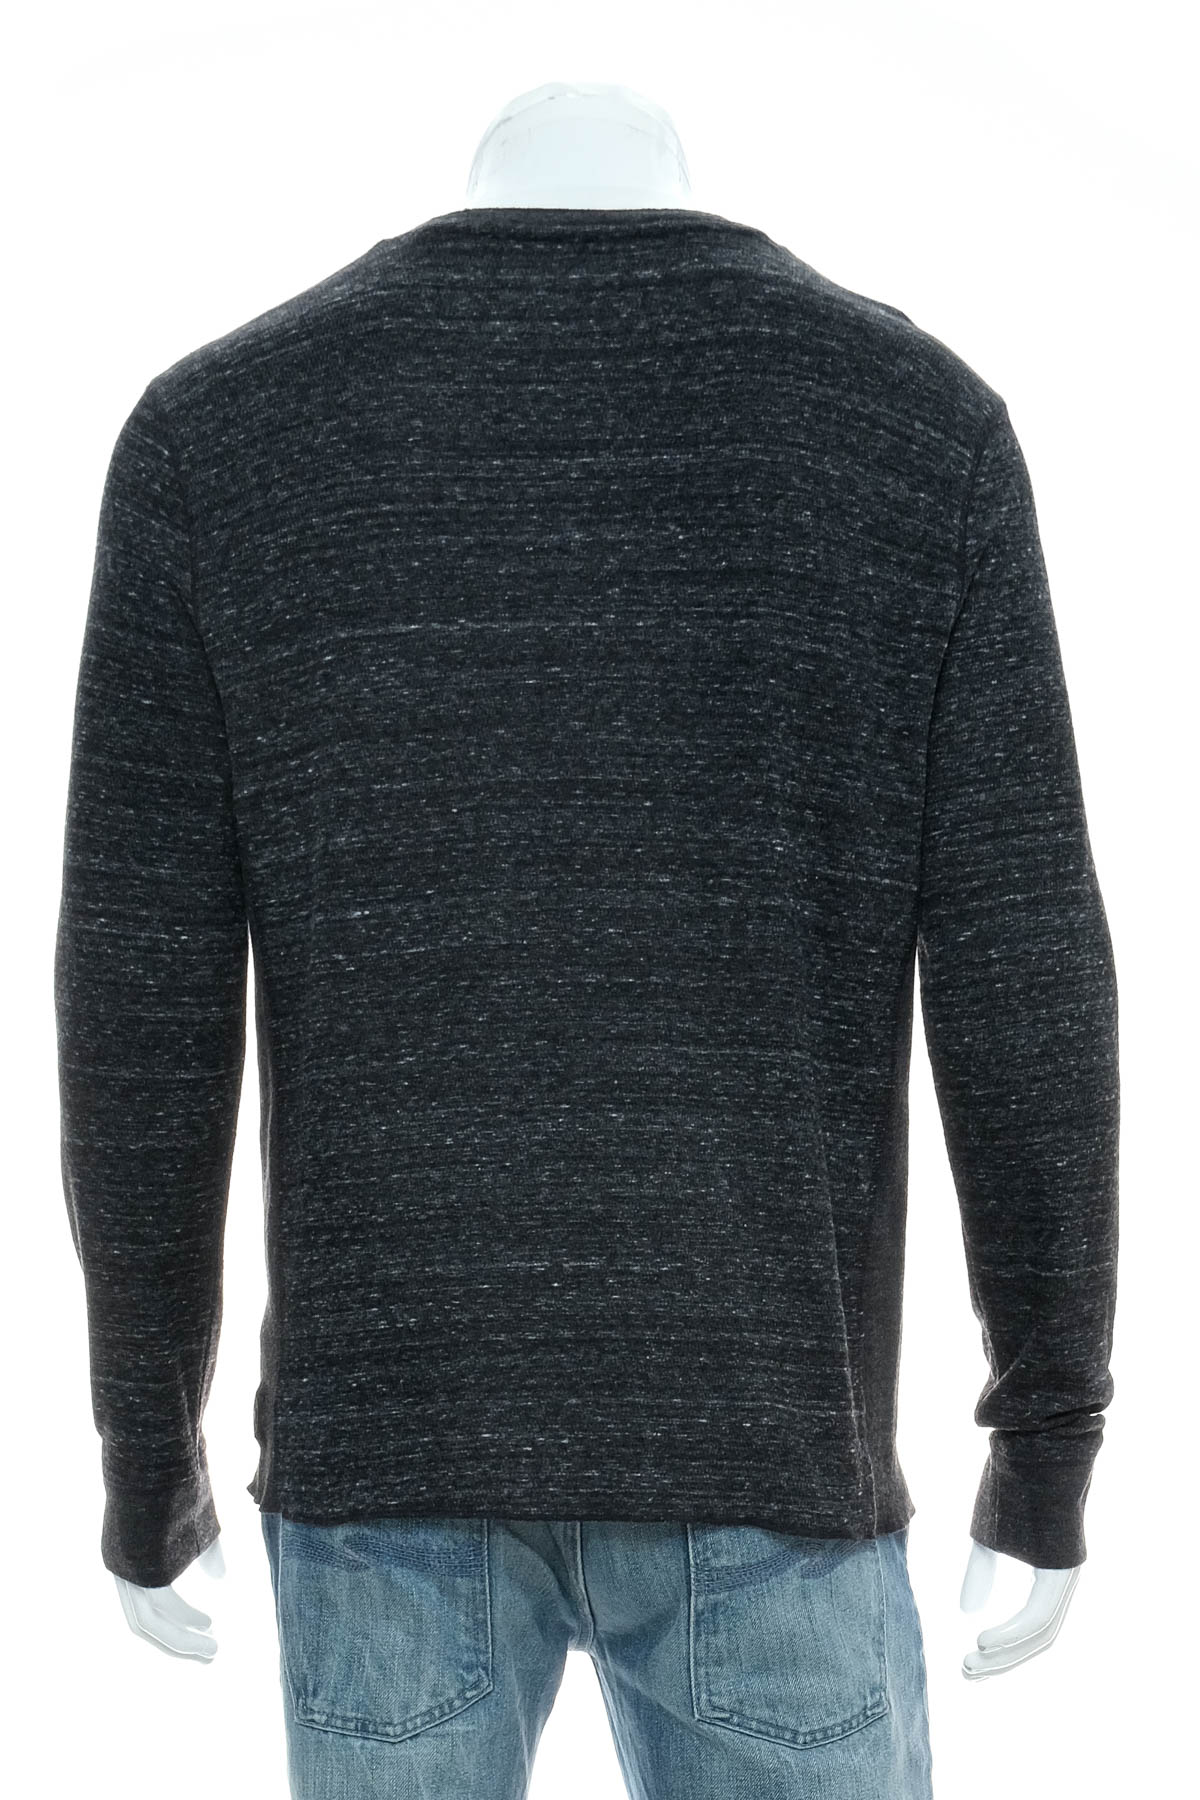 Men's sweater - Express - 1